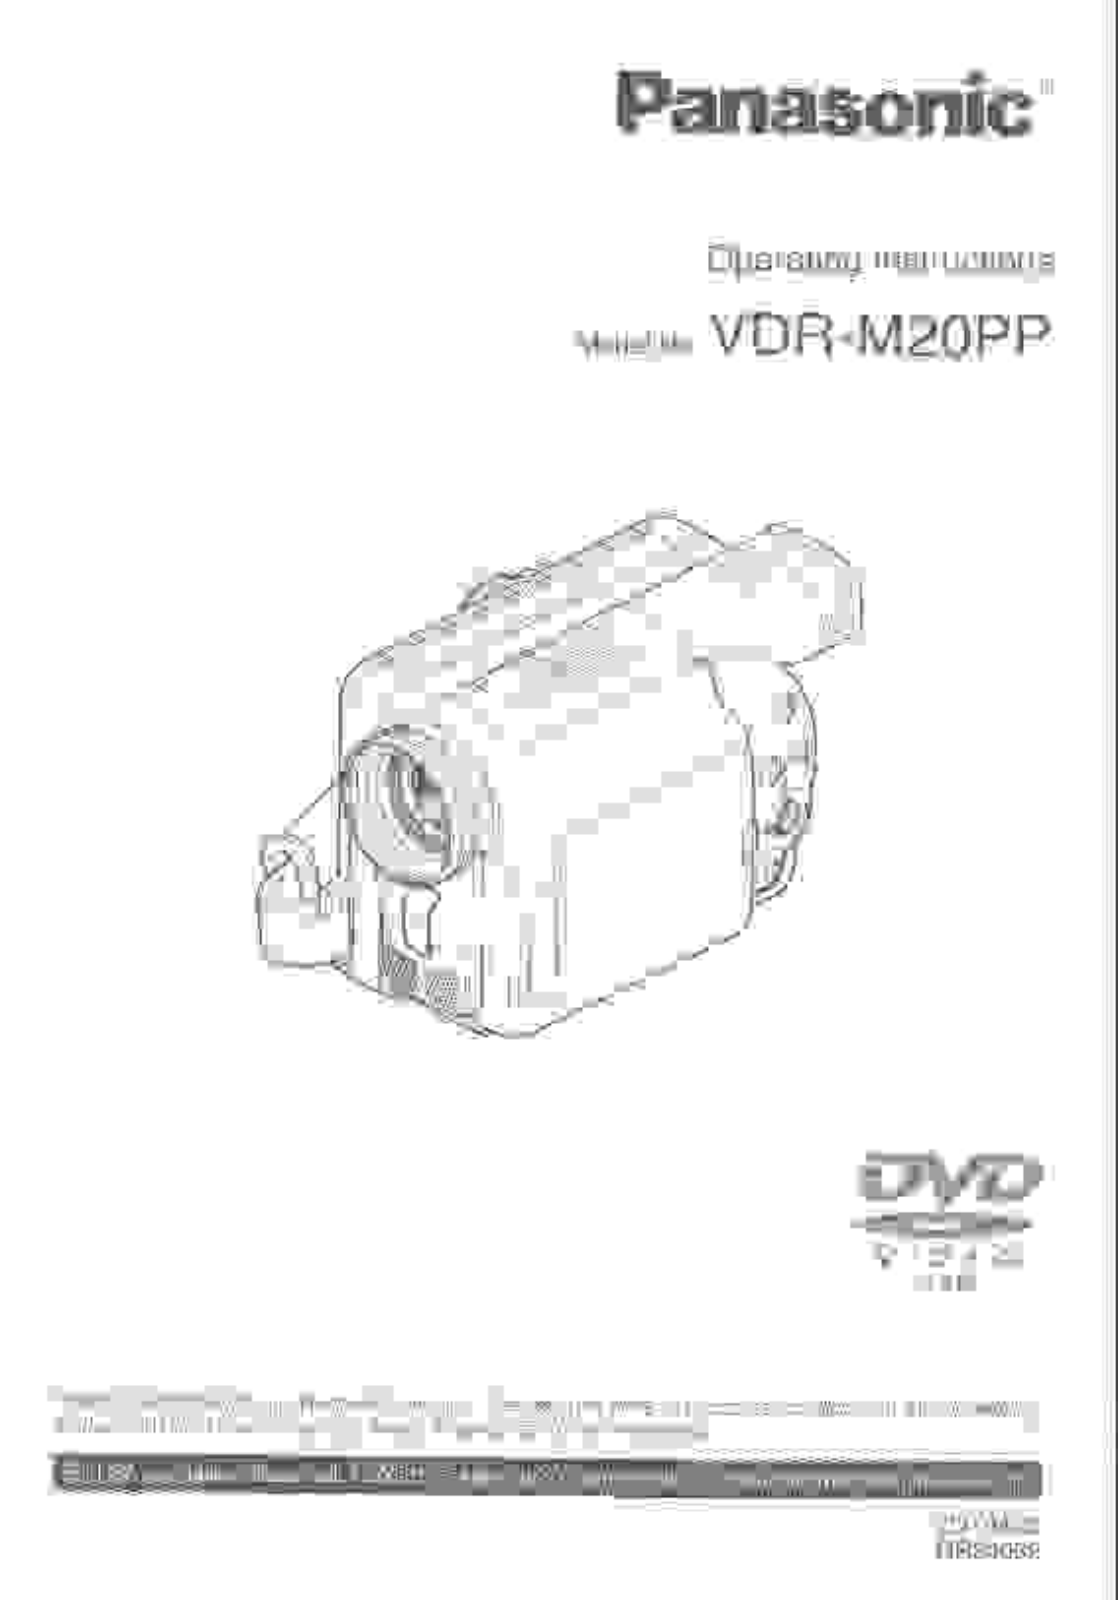 Panasonic VDR-M20PP Operating Instruction